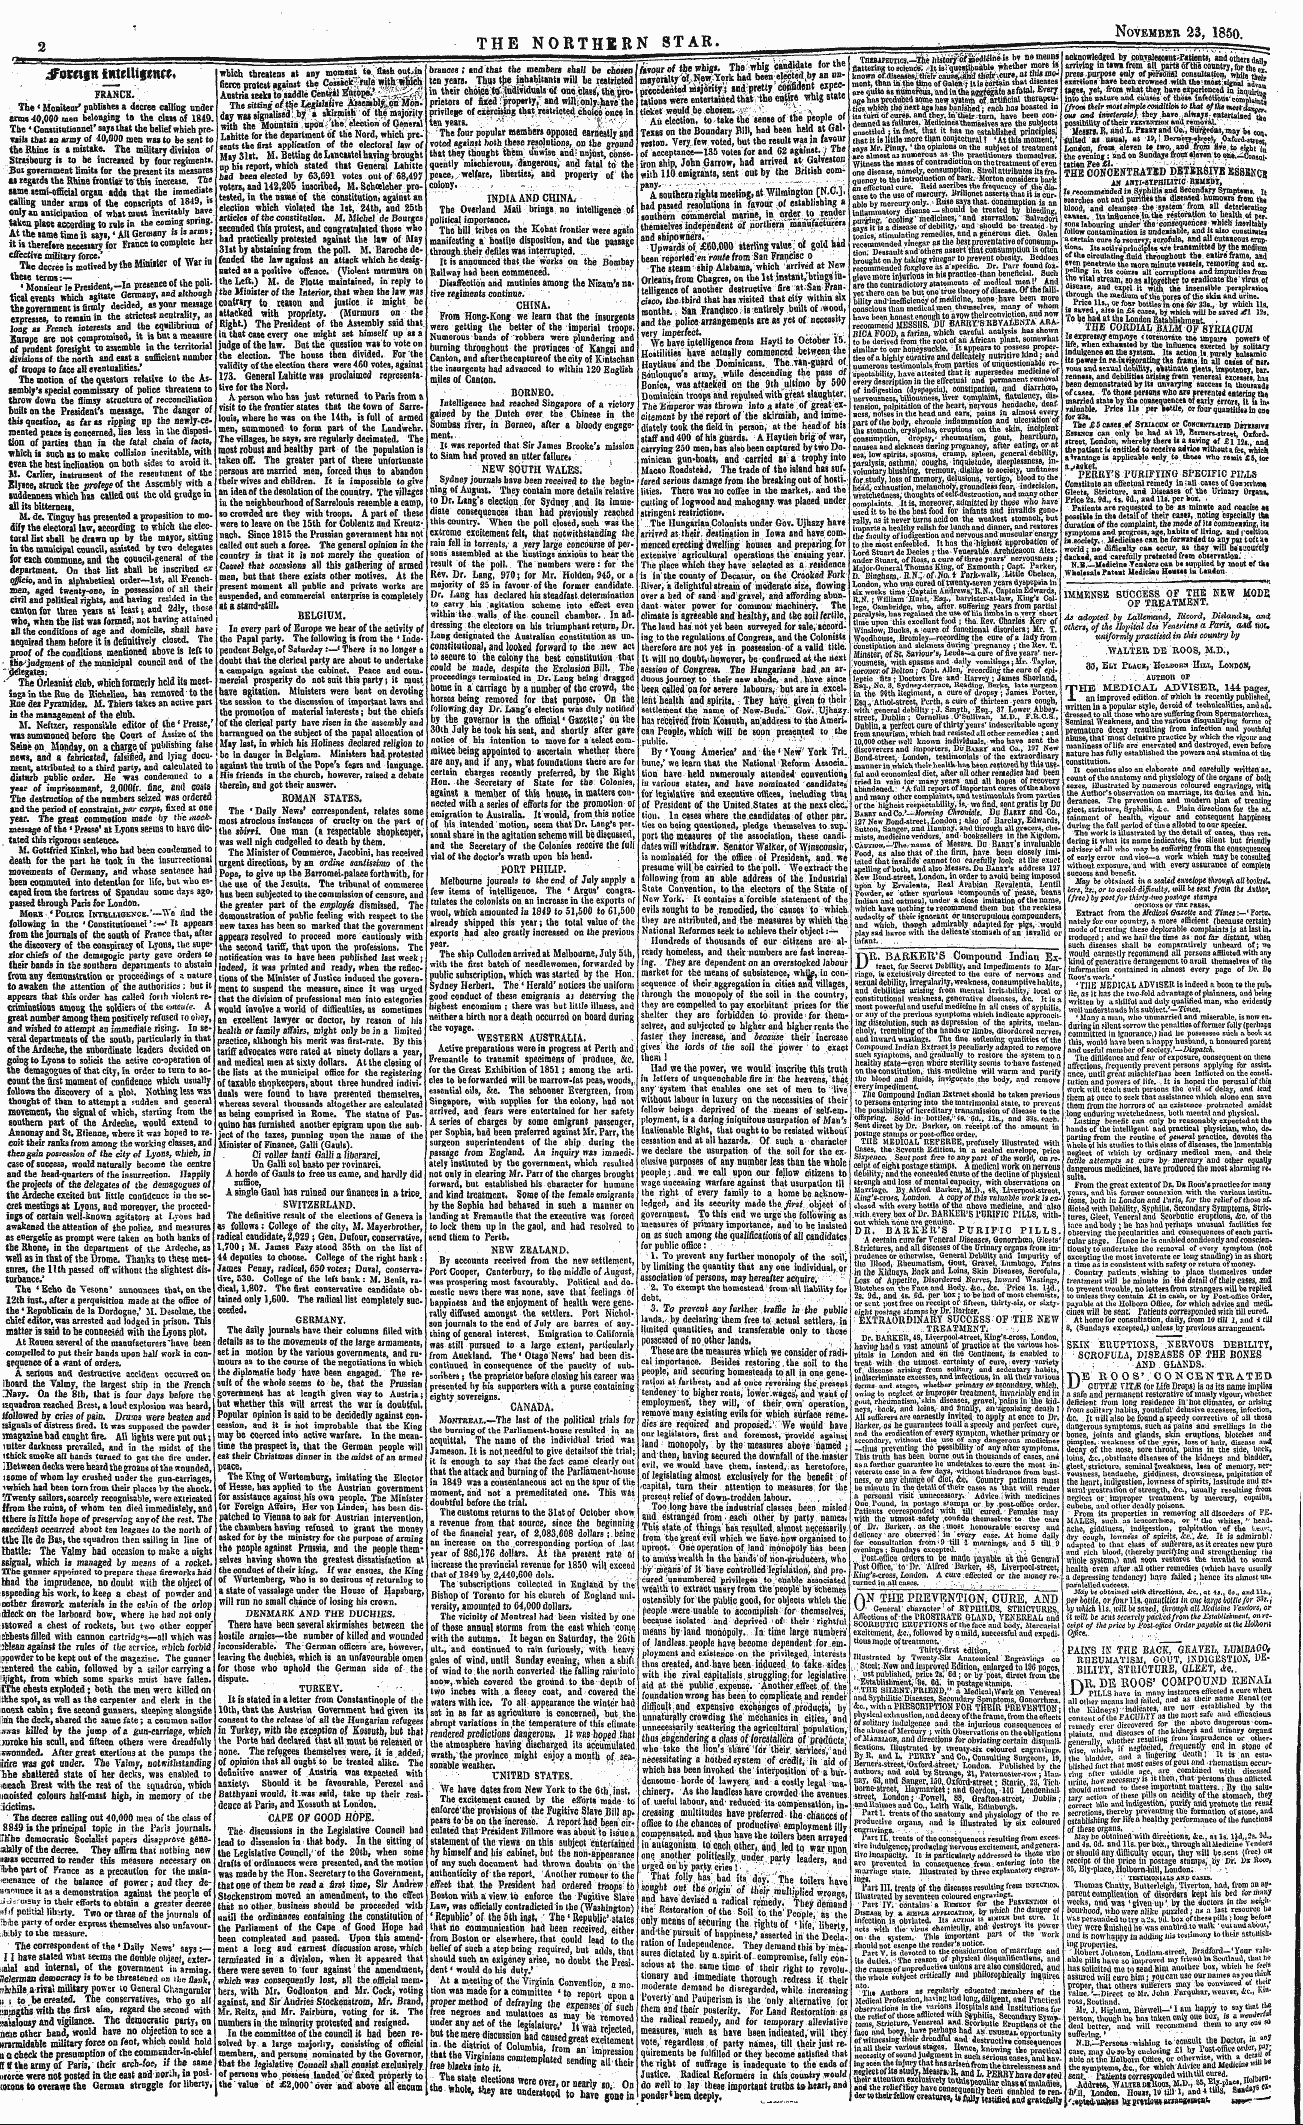 Northern Star (1837-1852): jS F Y, 2nd edition - Prance. / The * Moniteur' Publishes A De...